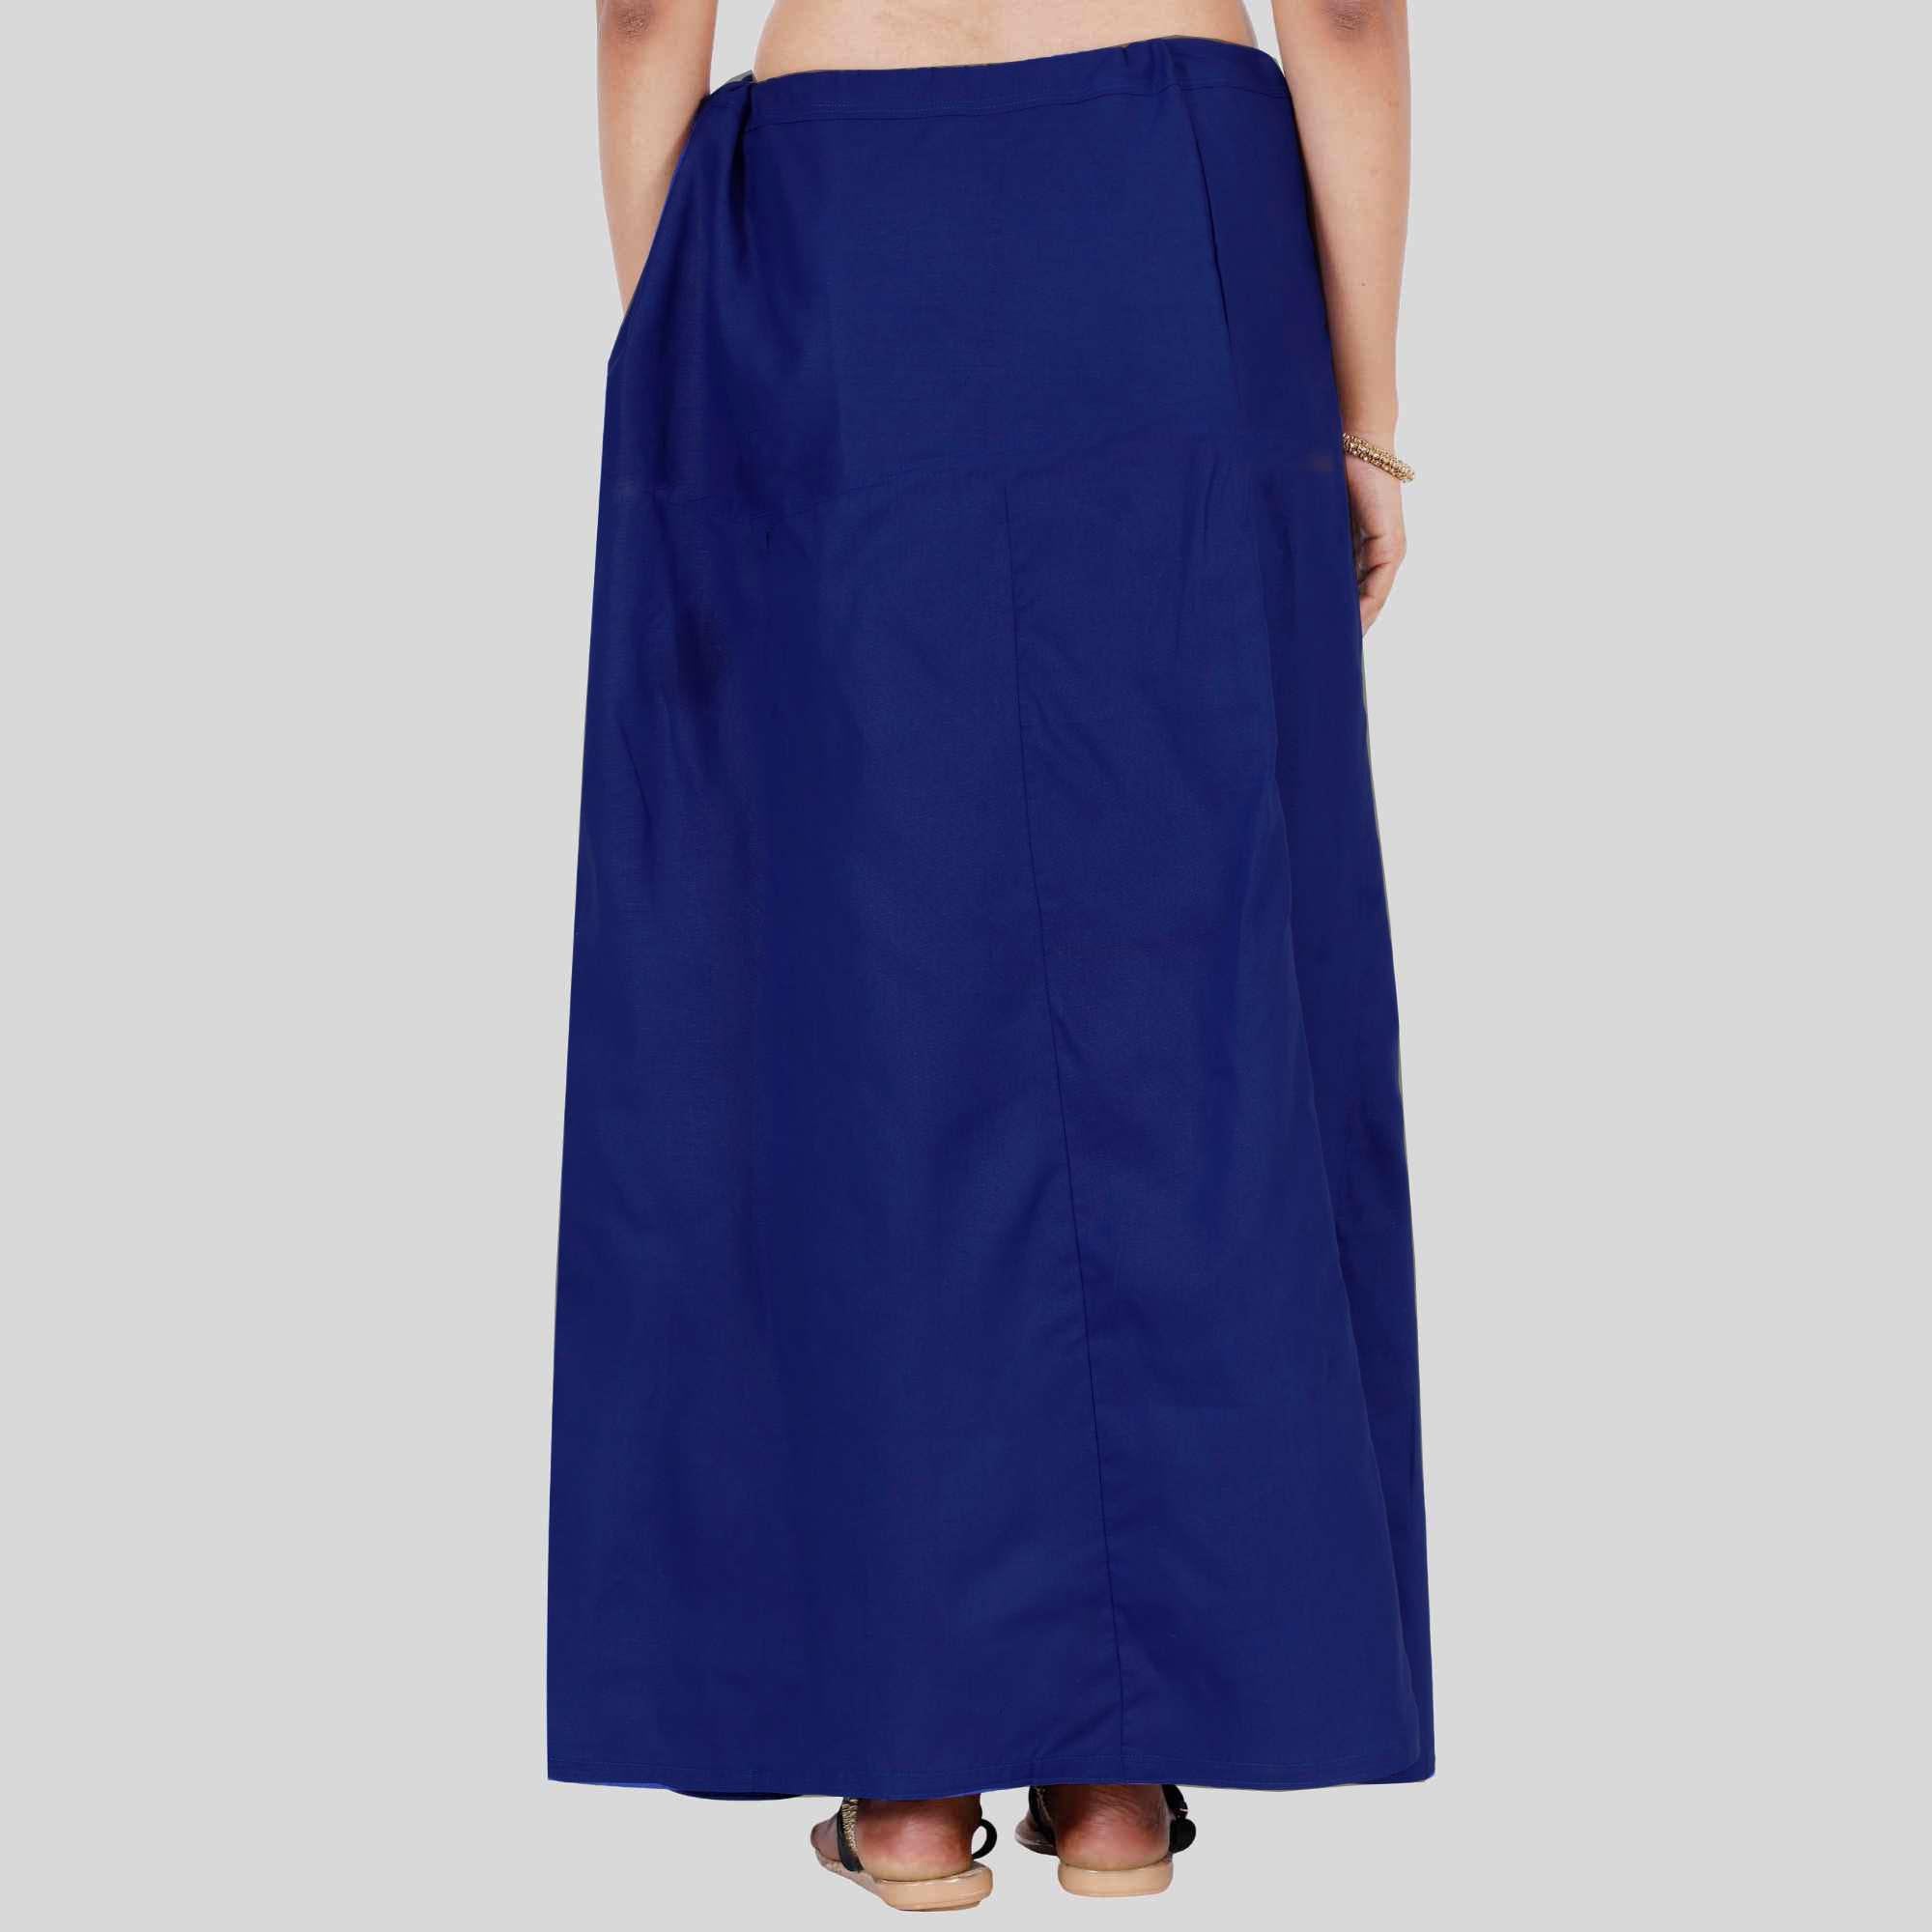 Cotton Petticoat in Navy blue color JISB brand